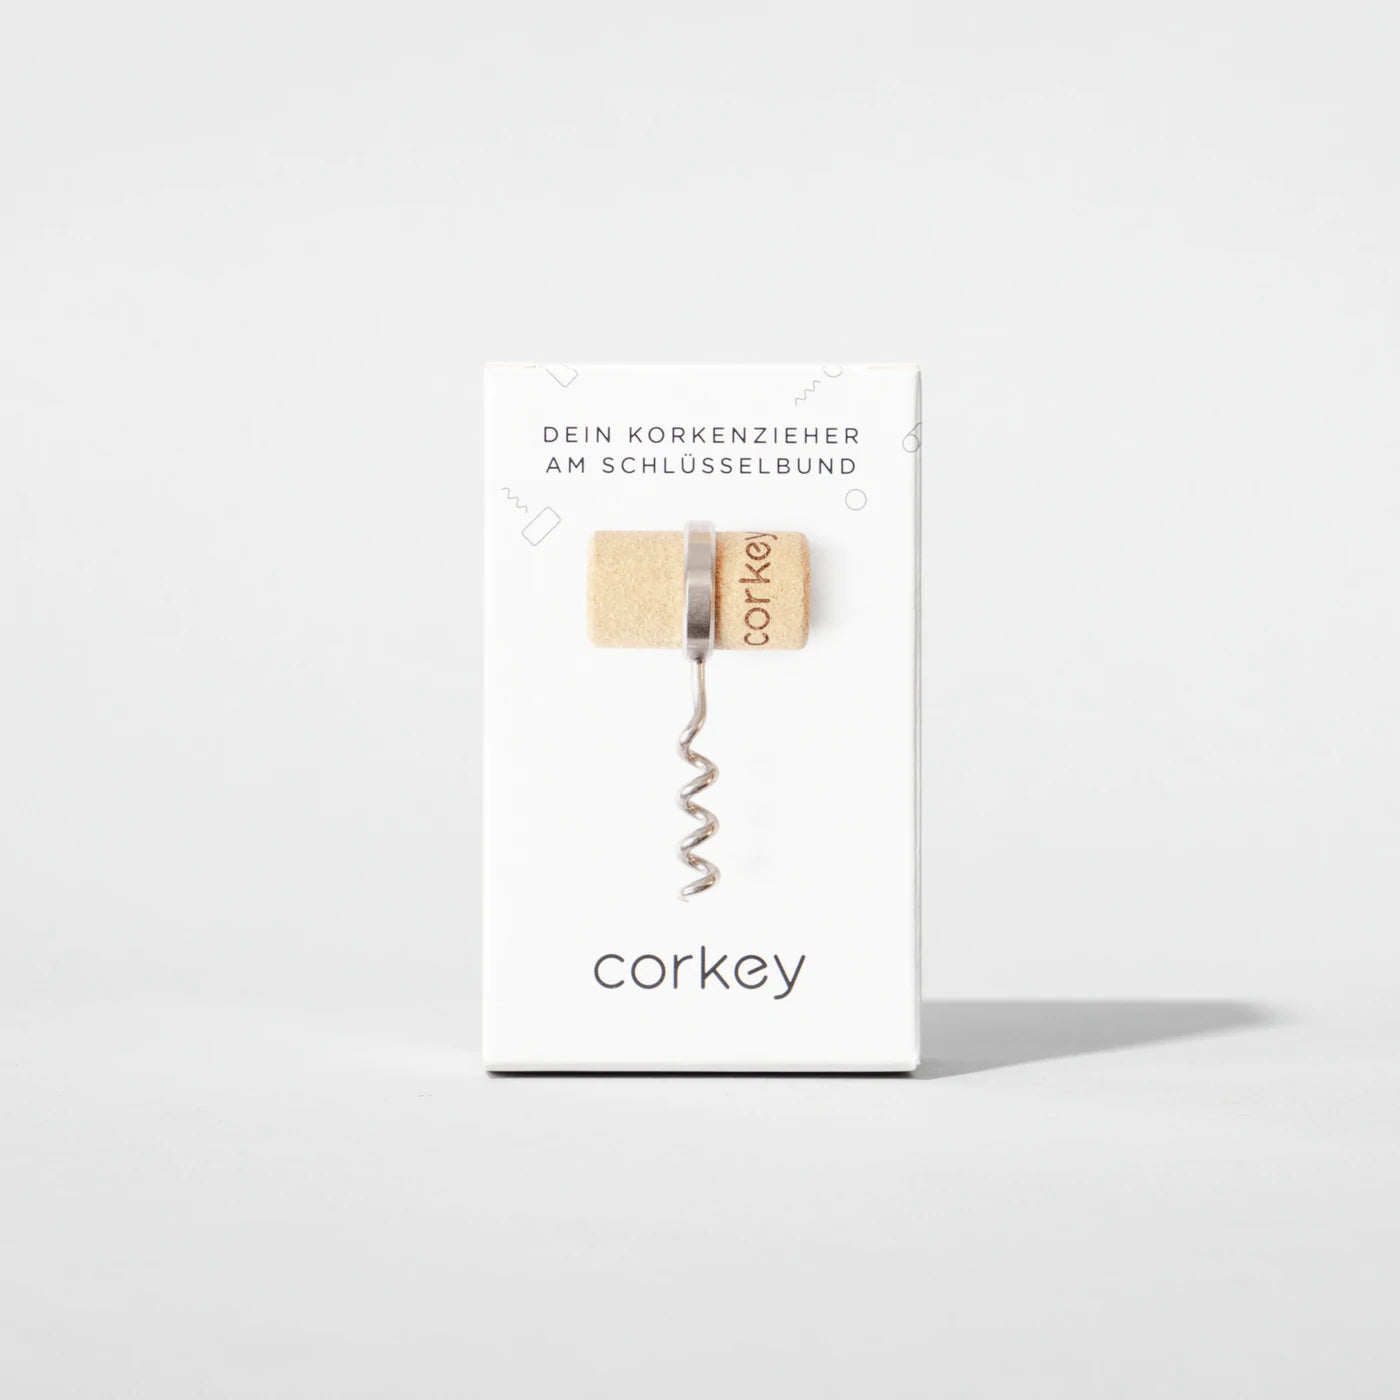 Corkey - Der Picknick-Korkenzieher